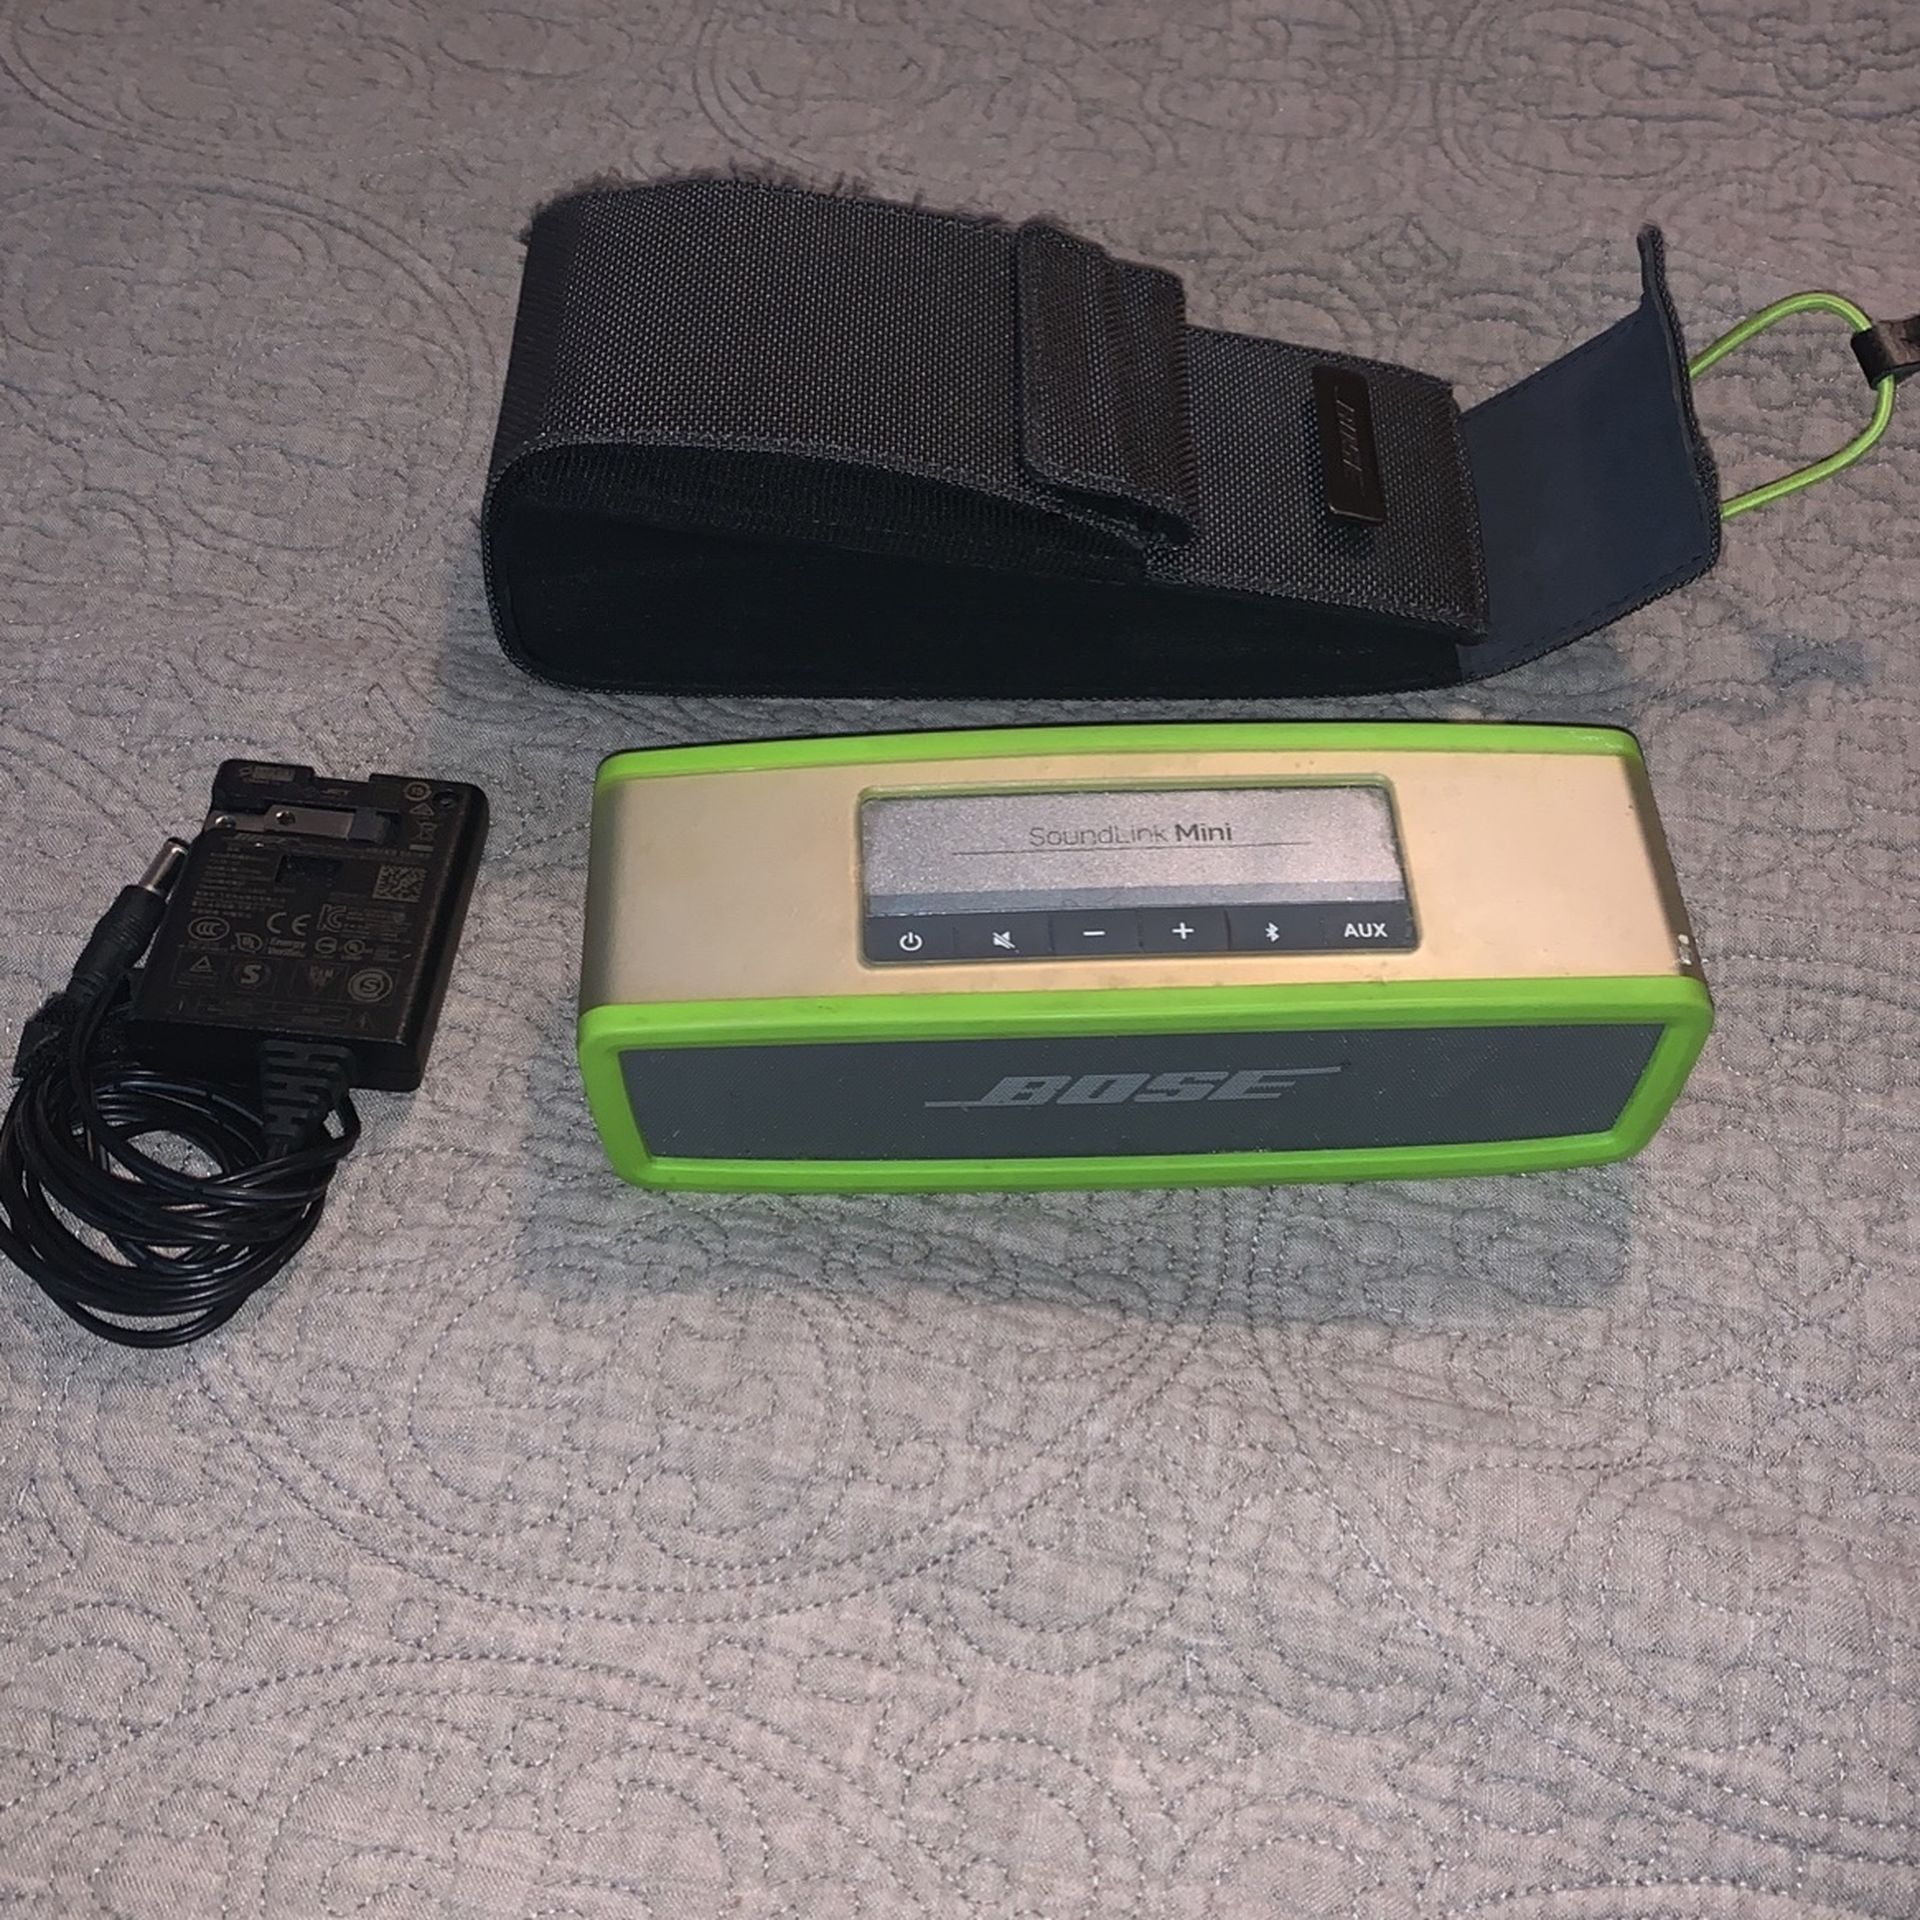 Bose SoundLink Mini Portable Bluetooth Speakers